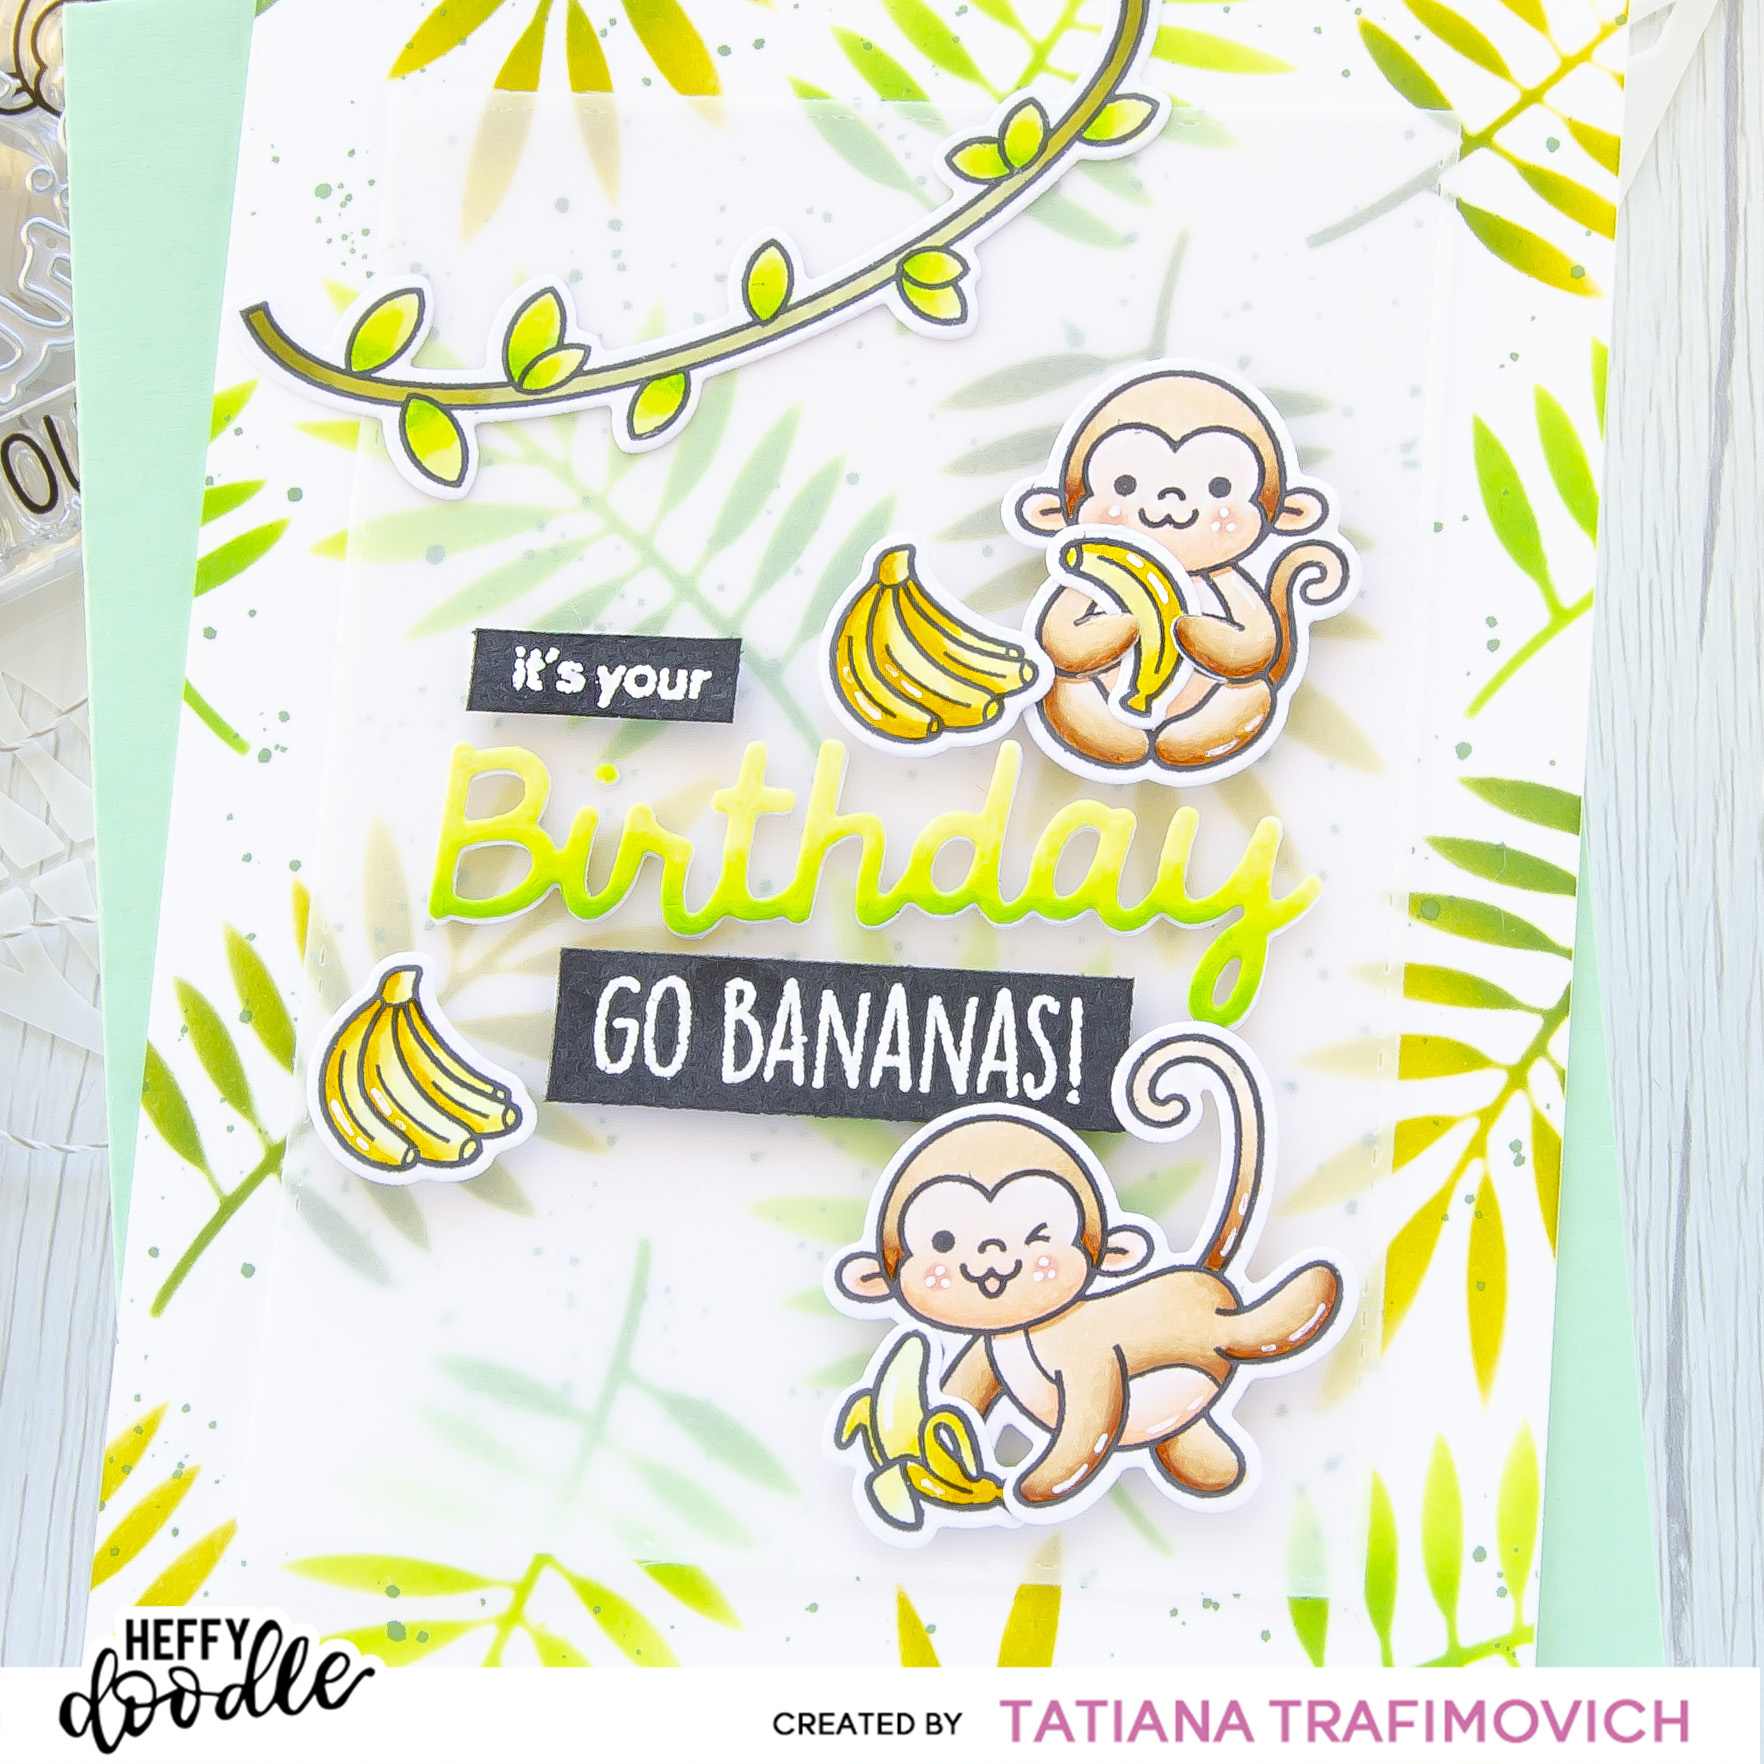 It's Your Birthday! Go Bananas! #handmade card by Tatiana Trafimovich #tatianacraftandart - Chimply The Best Stamp Set by Heffy Doodle #heffydoodle